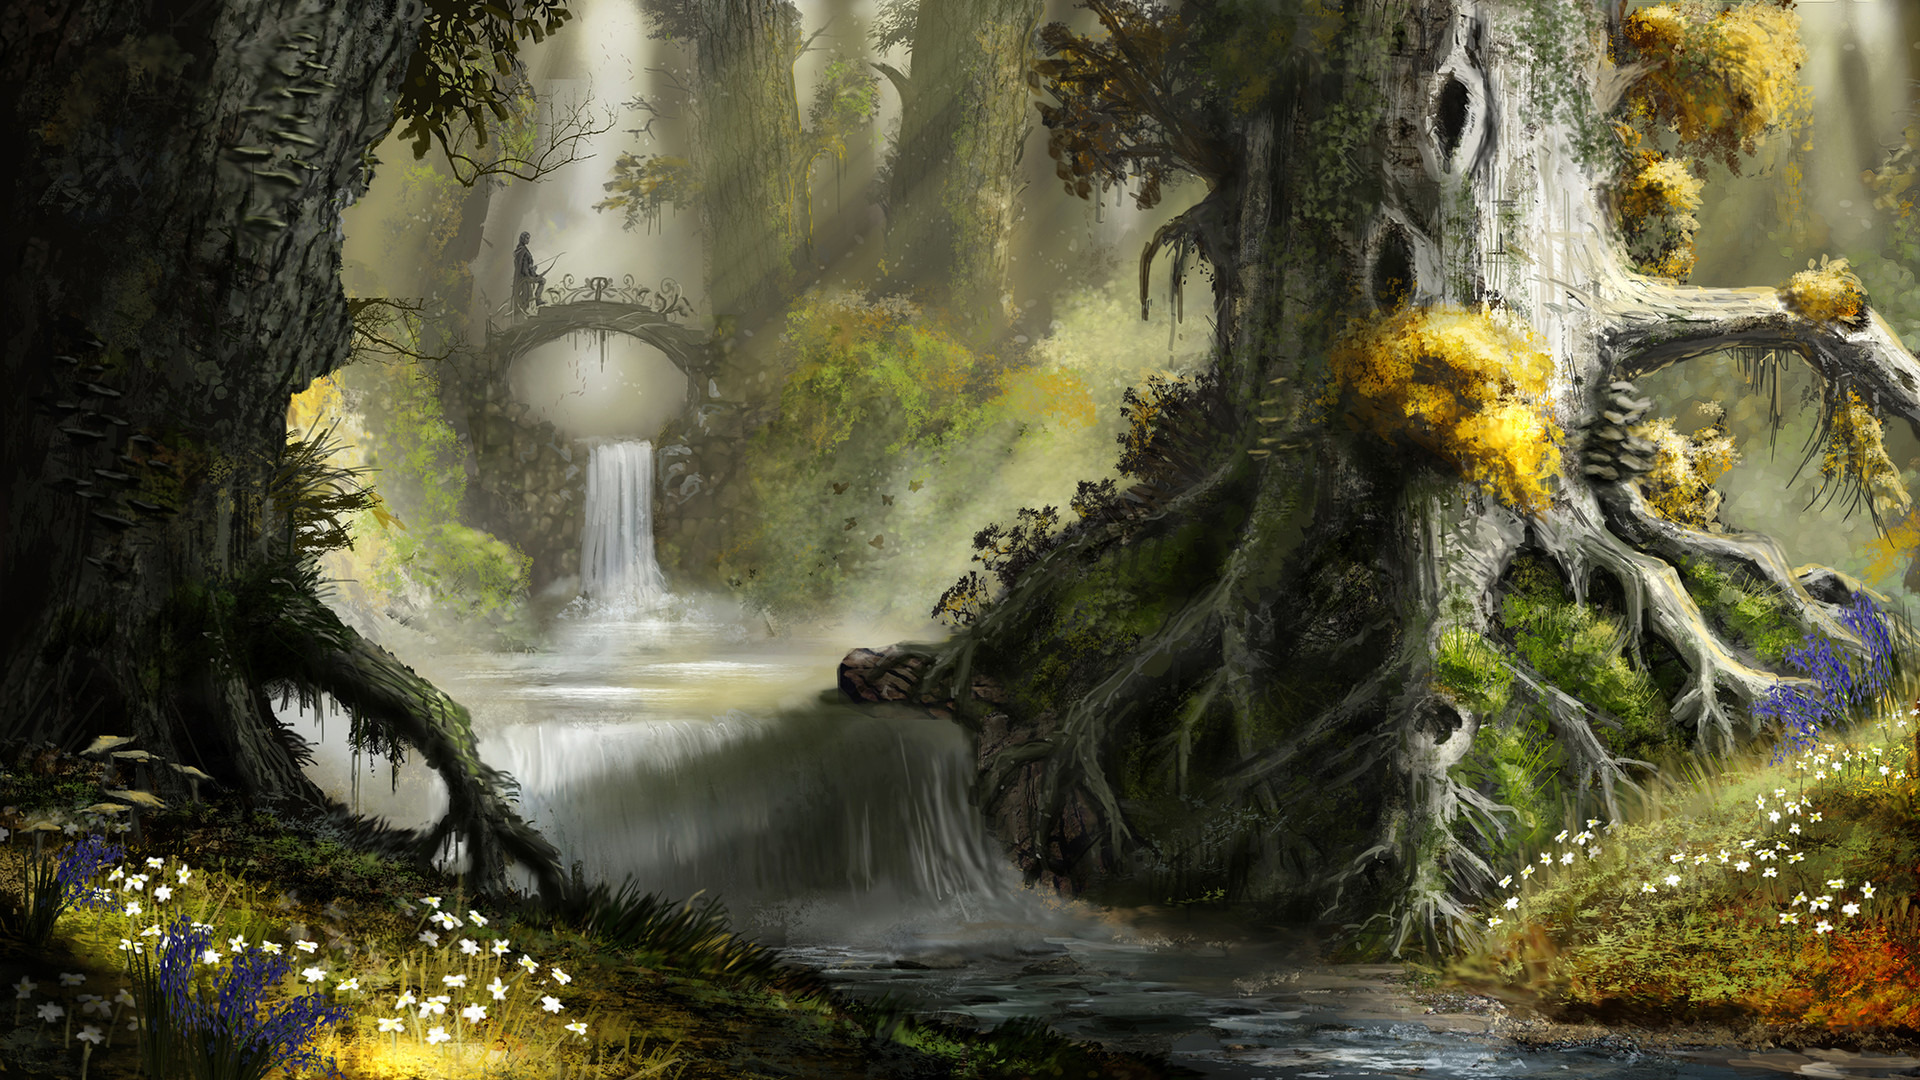 https://artistmonkeys.com/wp-content/uploads/2021/11/Lothlorien-Elven-forest-landscape-7.jpg